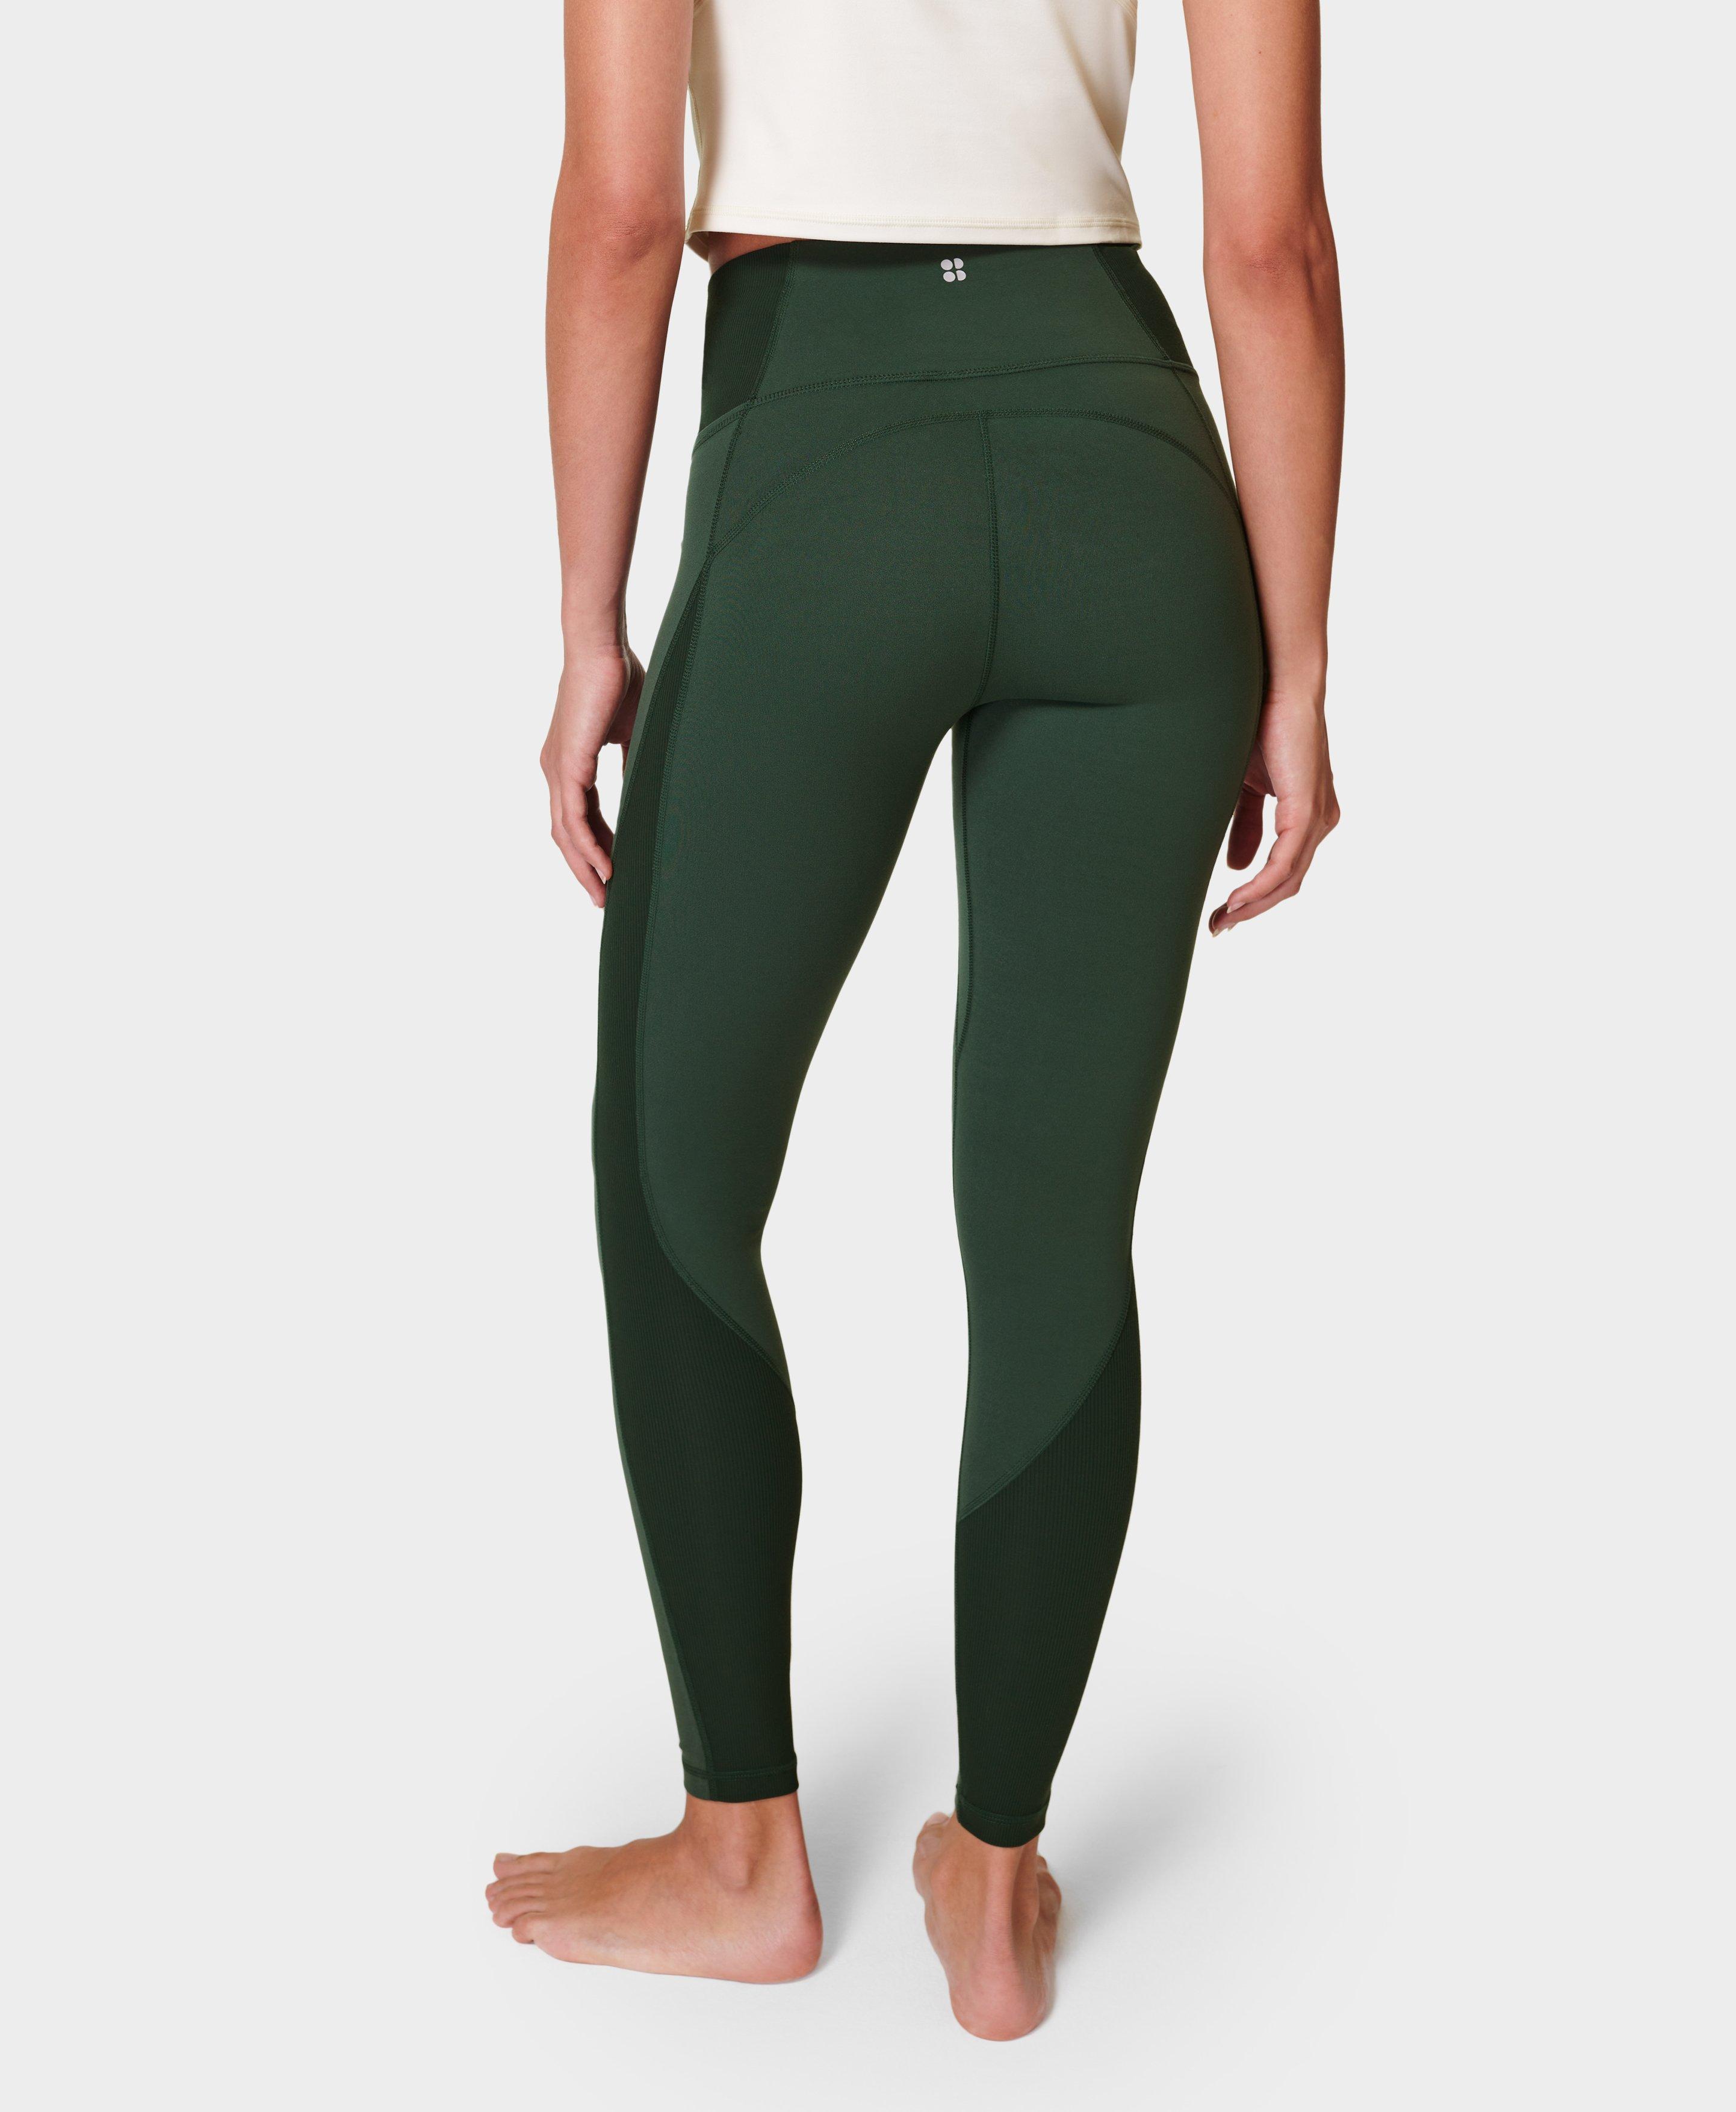 CAICJ98 Womens Pants SweatyRocks Women's Basic Leggings Stretchy Slim  Elastic High Waist Work Pants Green,S